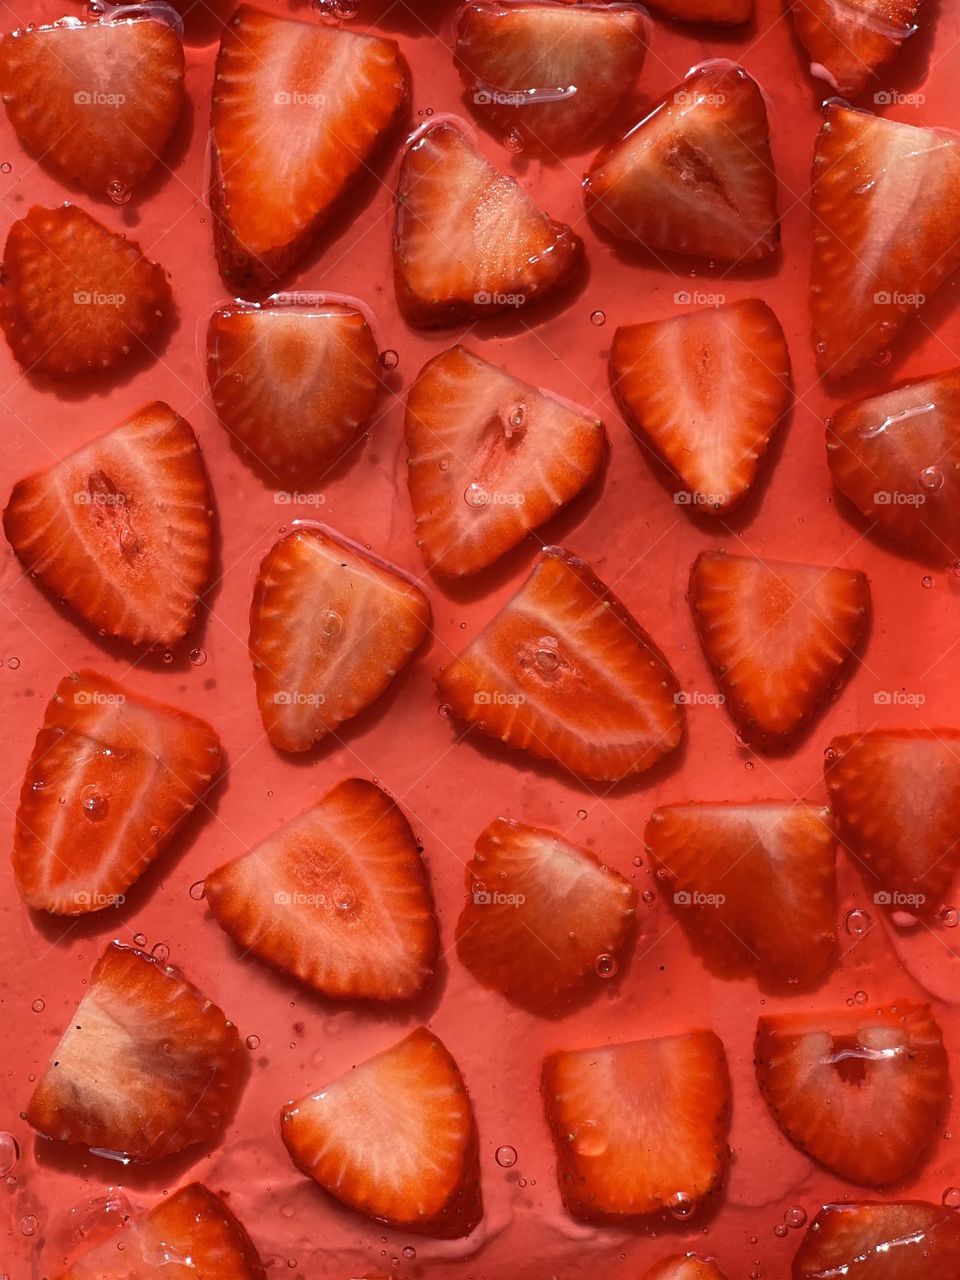 Strawberry jelly